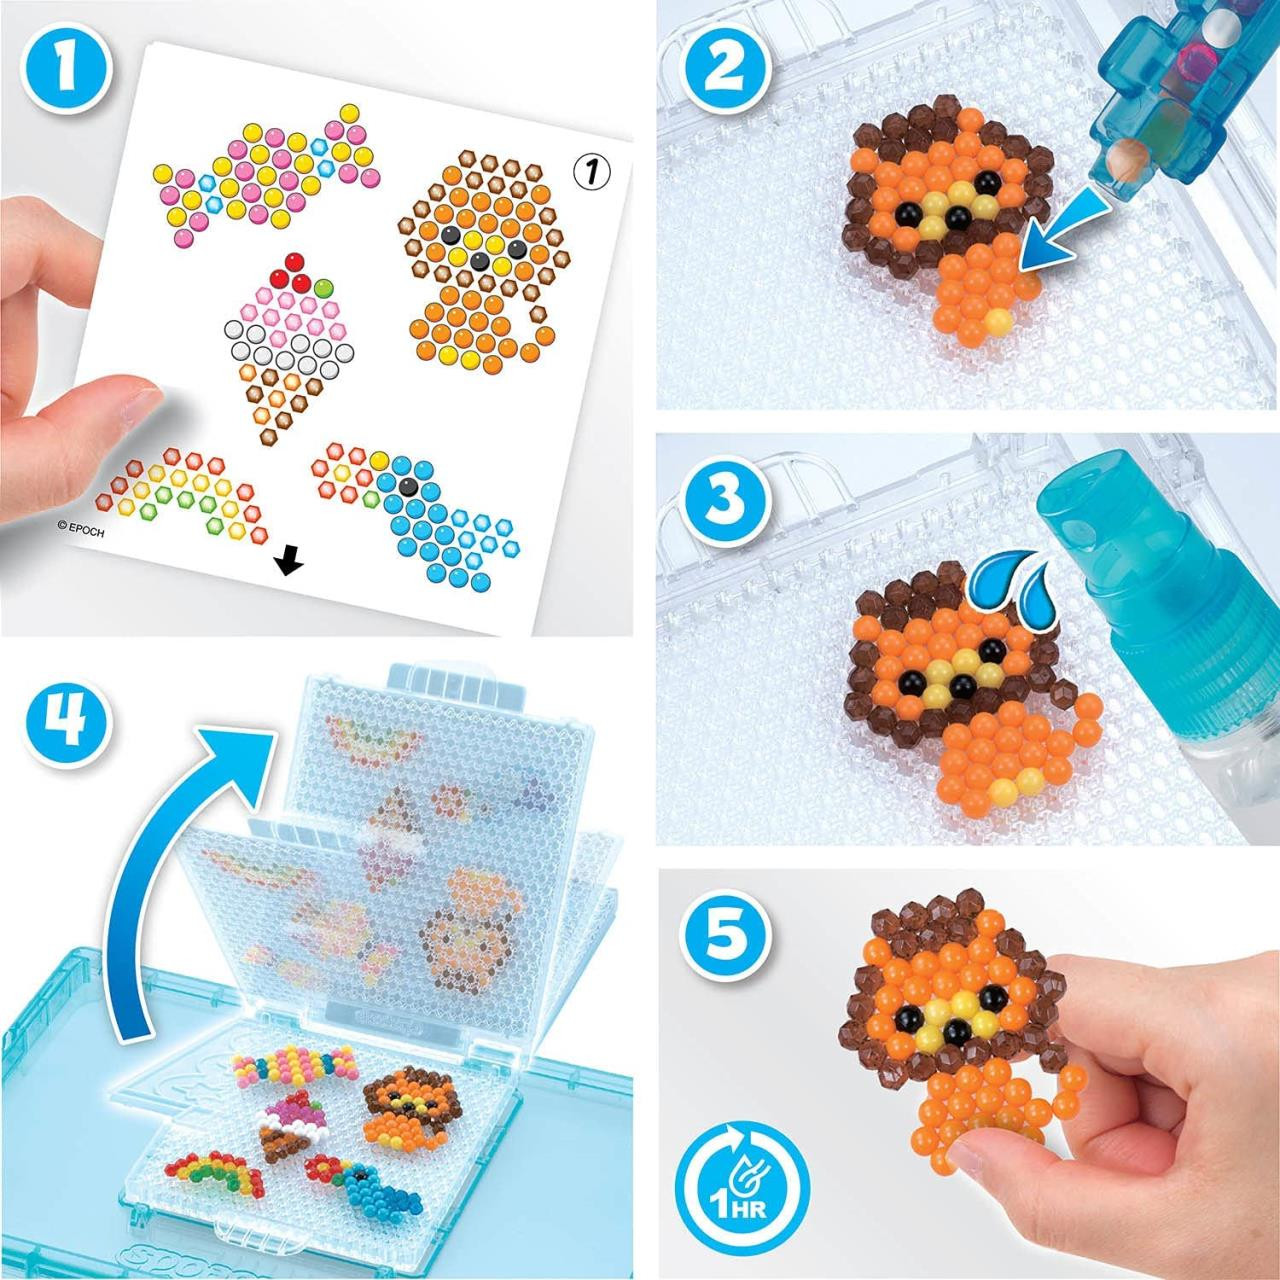 Epoch: Aquabeads - Mini Play Pack – Rhen's Nest Toy Shop